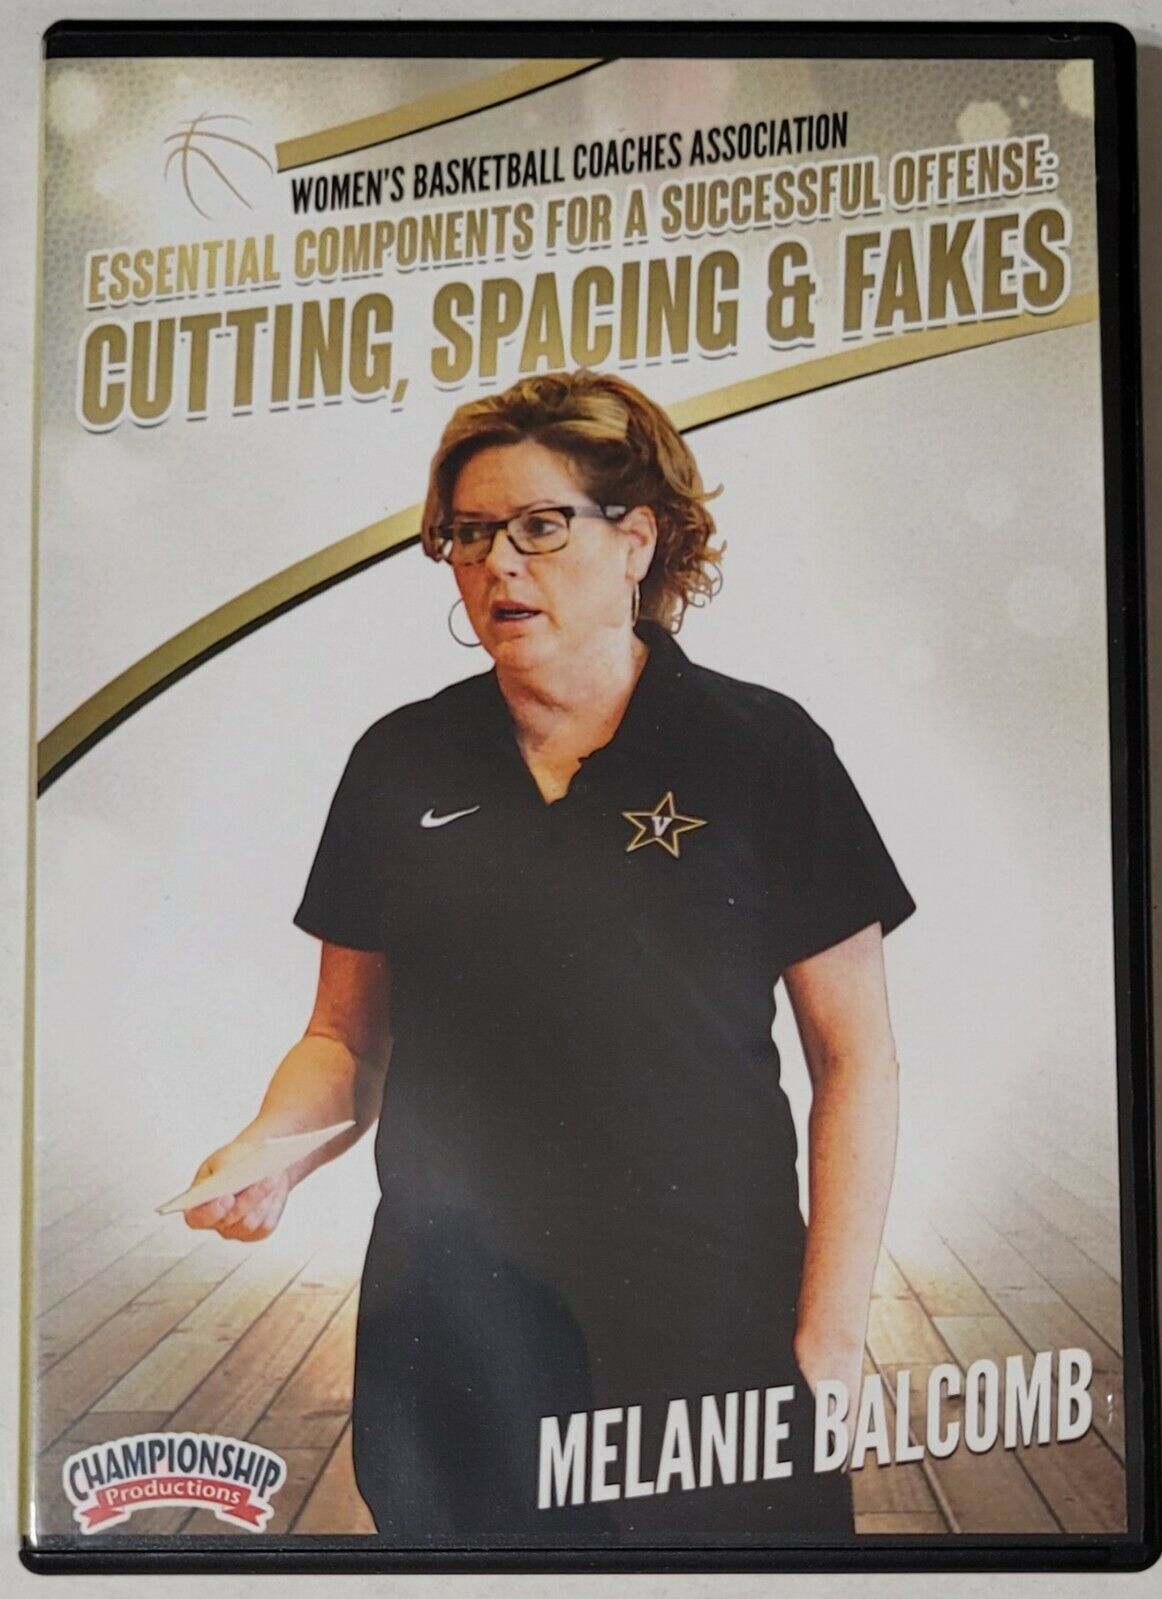 Melanie Balcomb -  Cutting, Spacing And Fakes -  Coaching / Training  Dvd